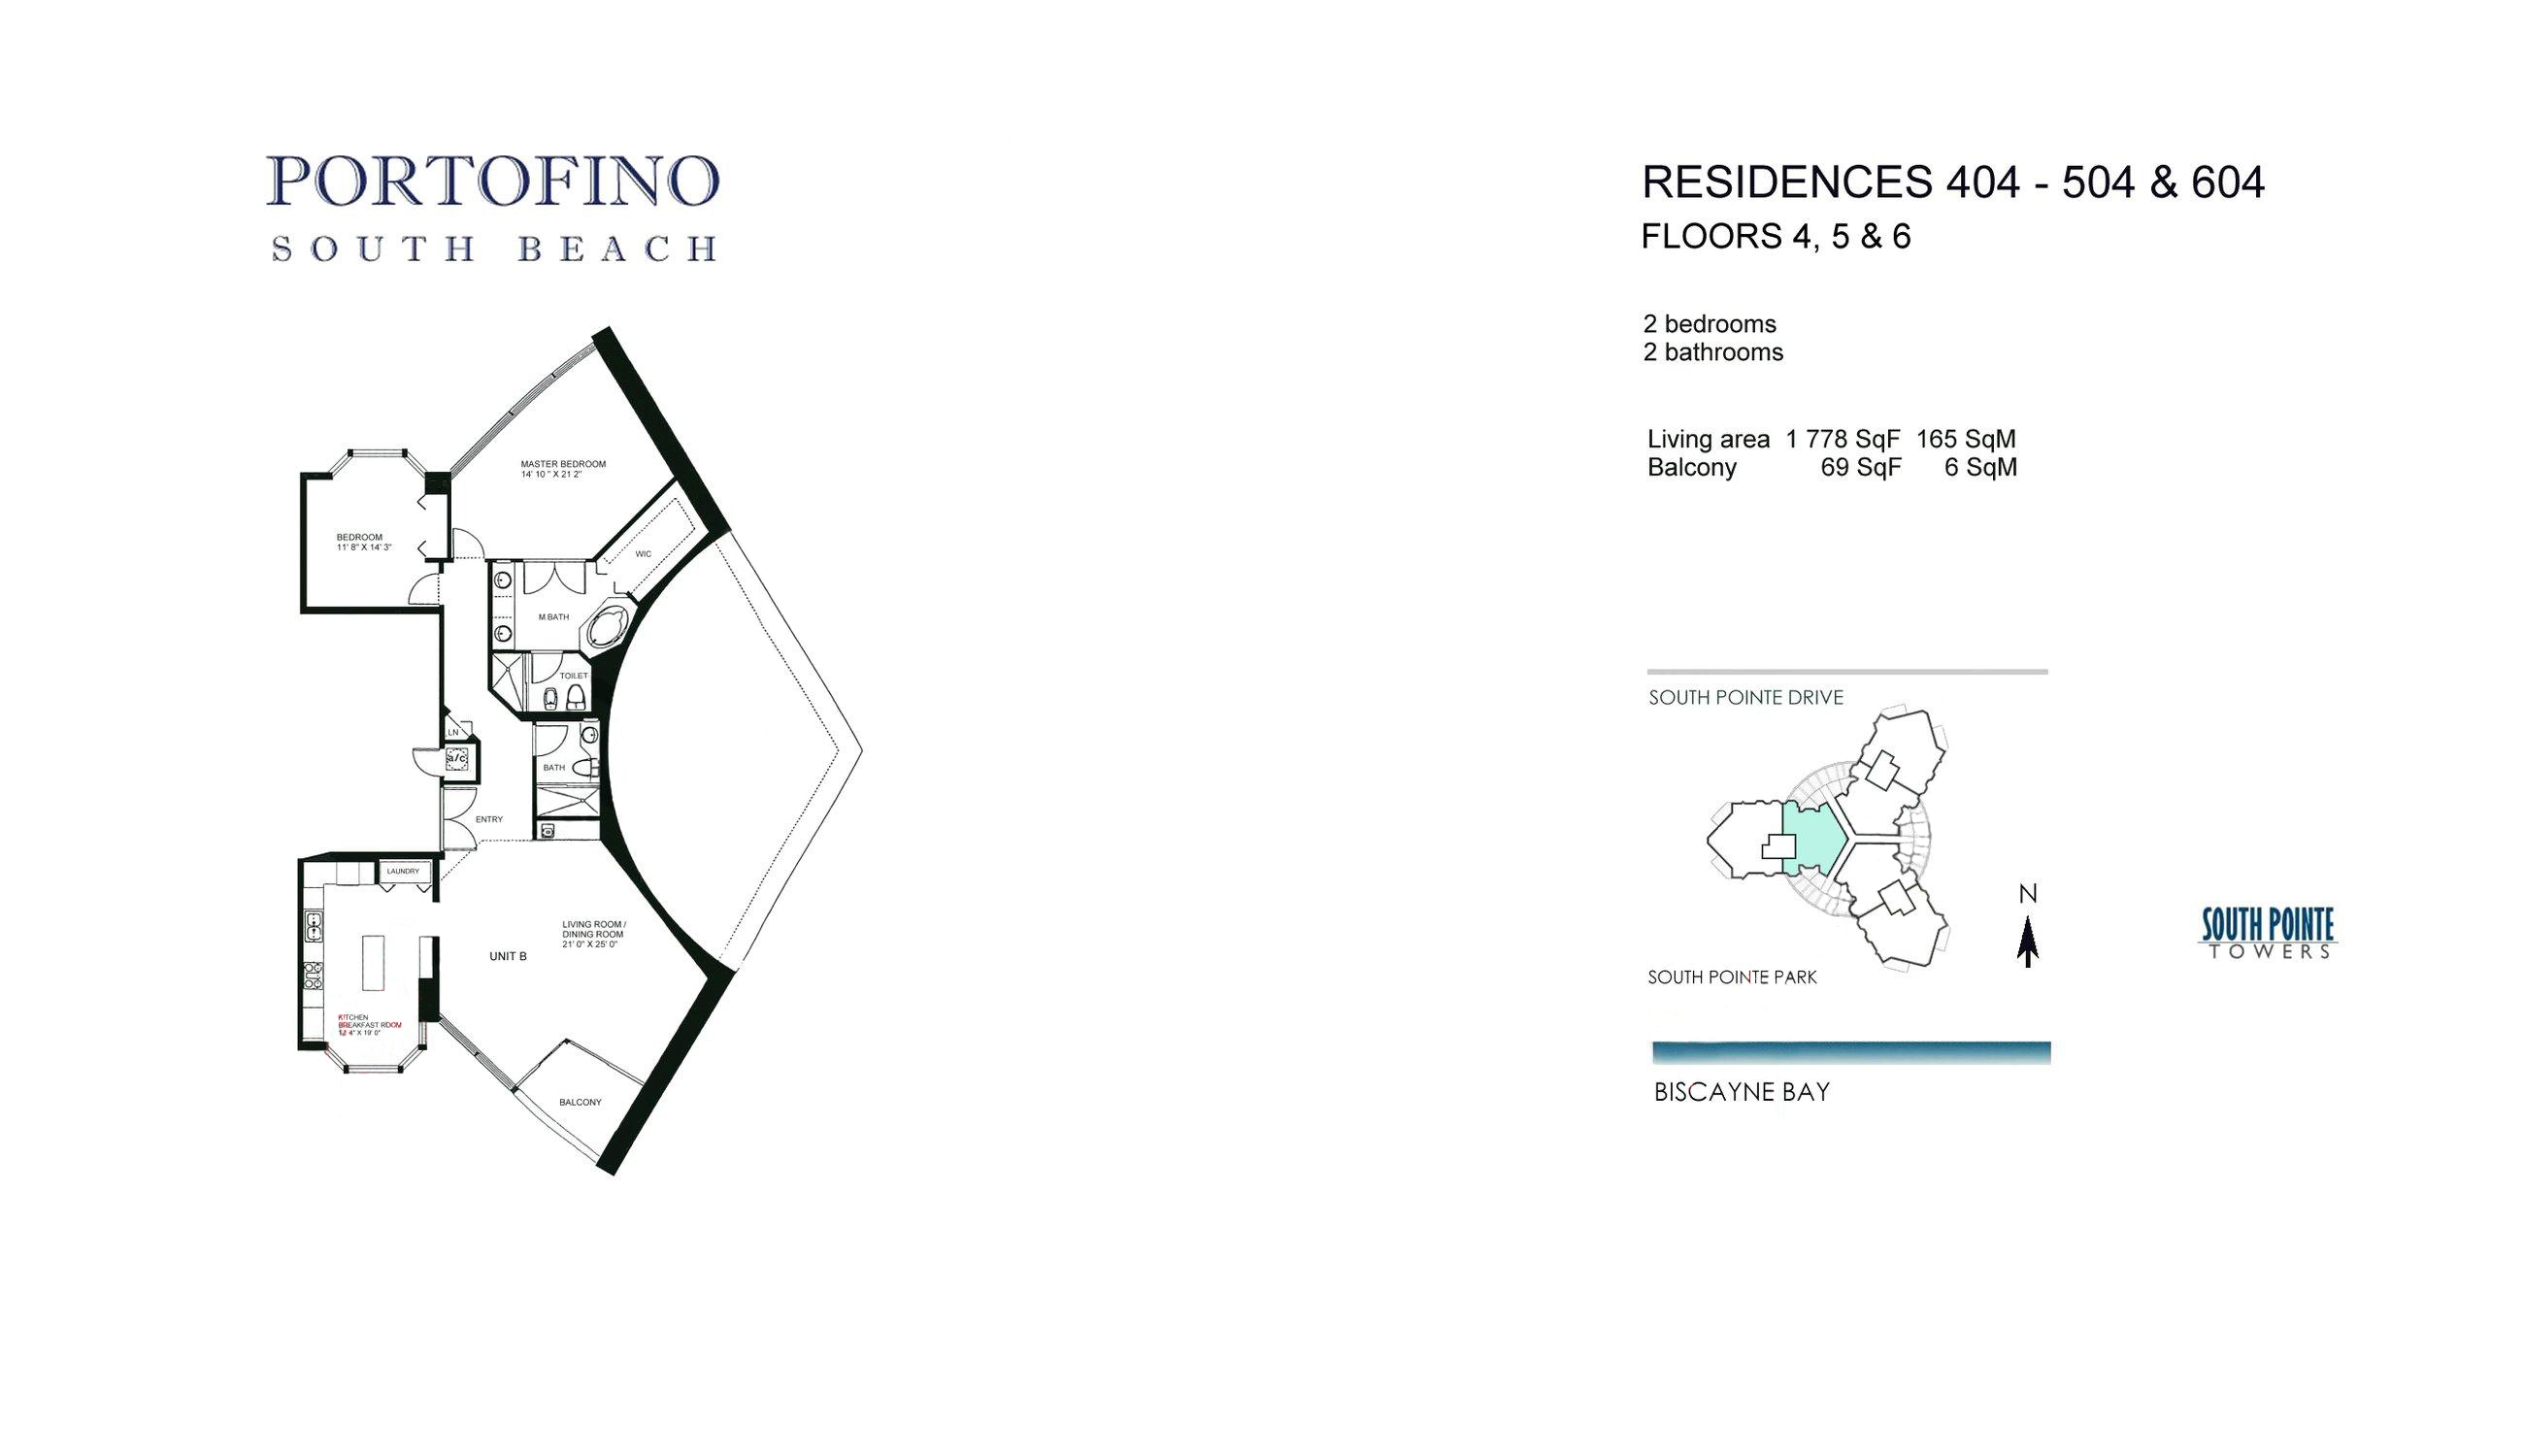 Portofino Tower Residences 404-504 & 604